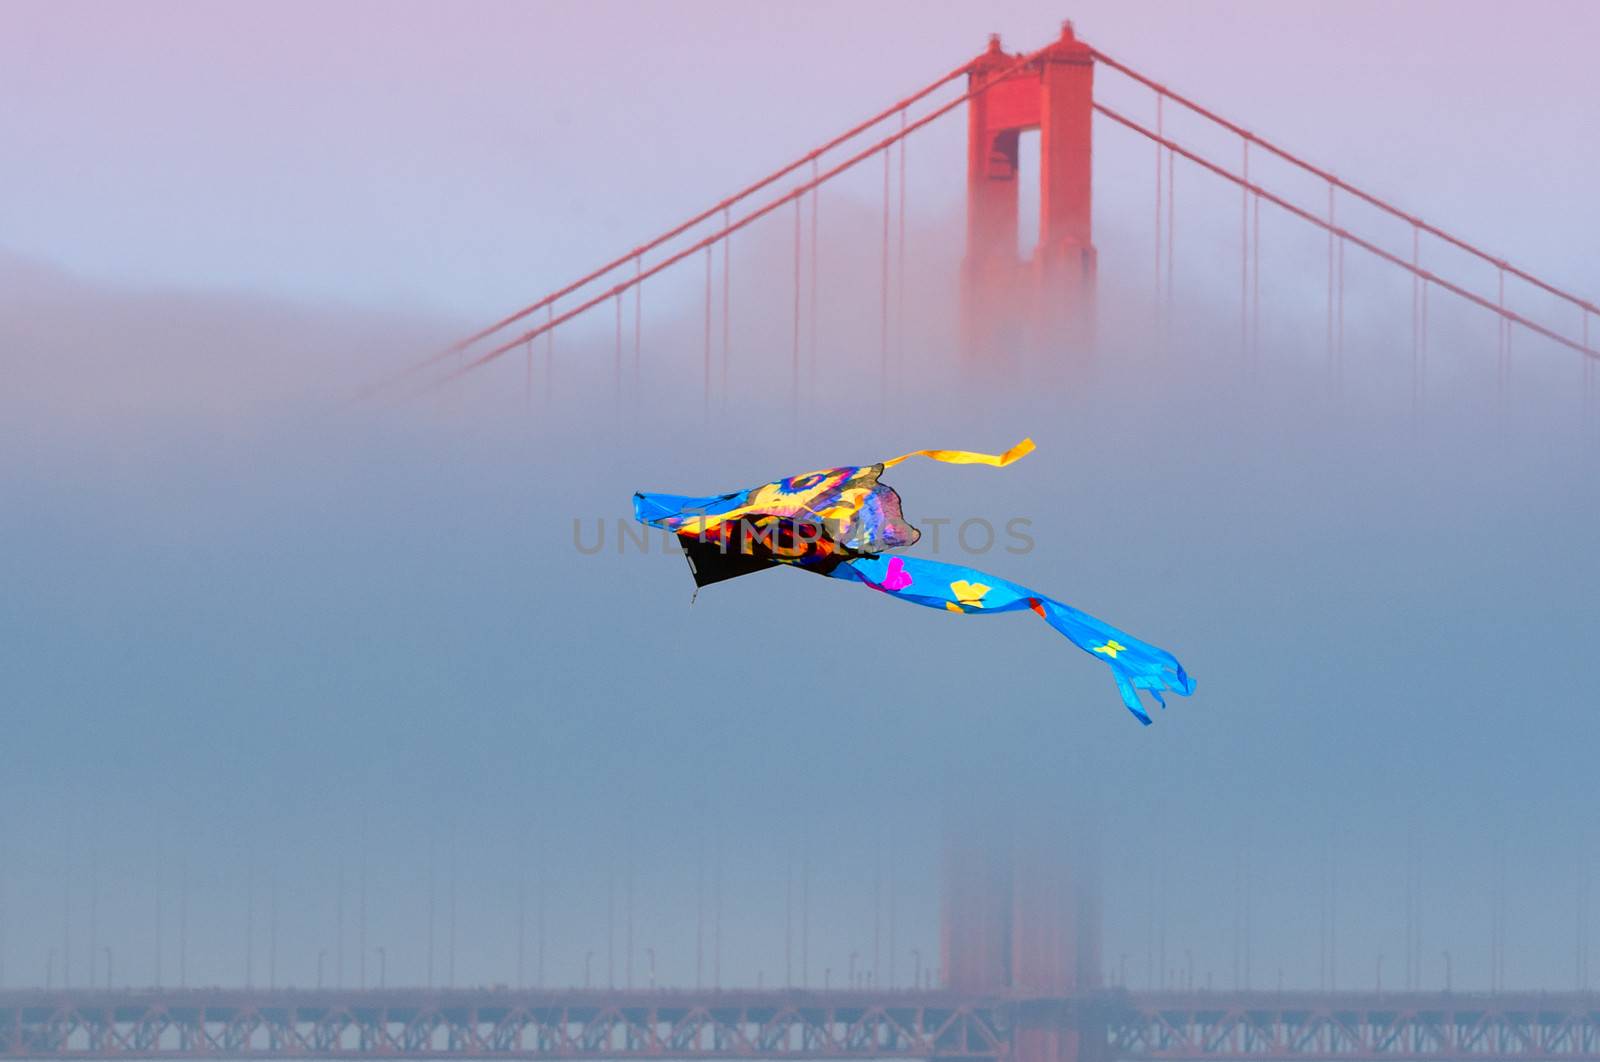 Kite flying in front of the Golden Gate Bridge, San Francisco Bay, San Francisco, California, USA